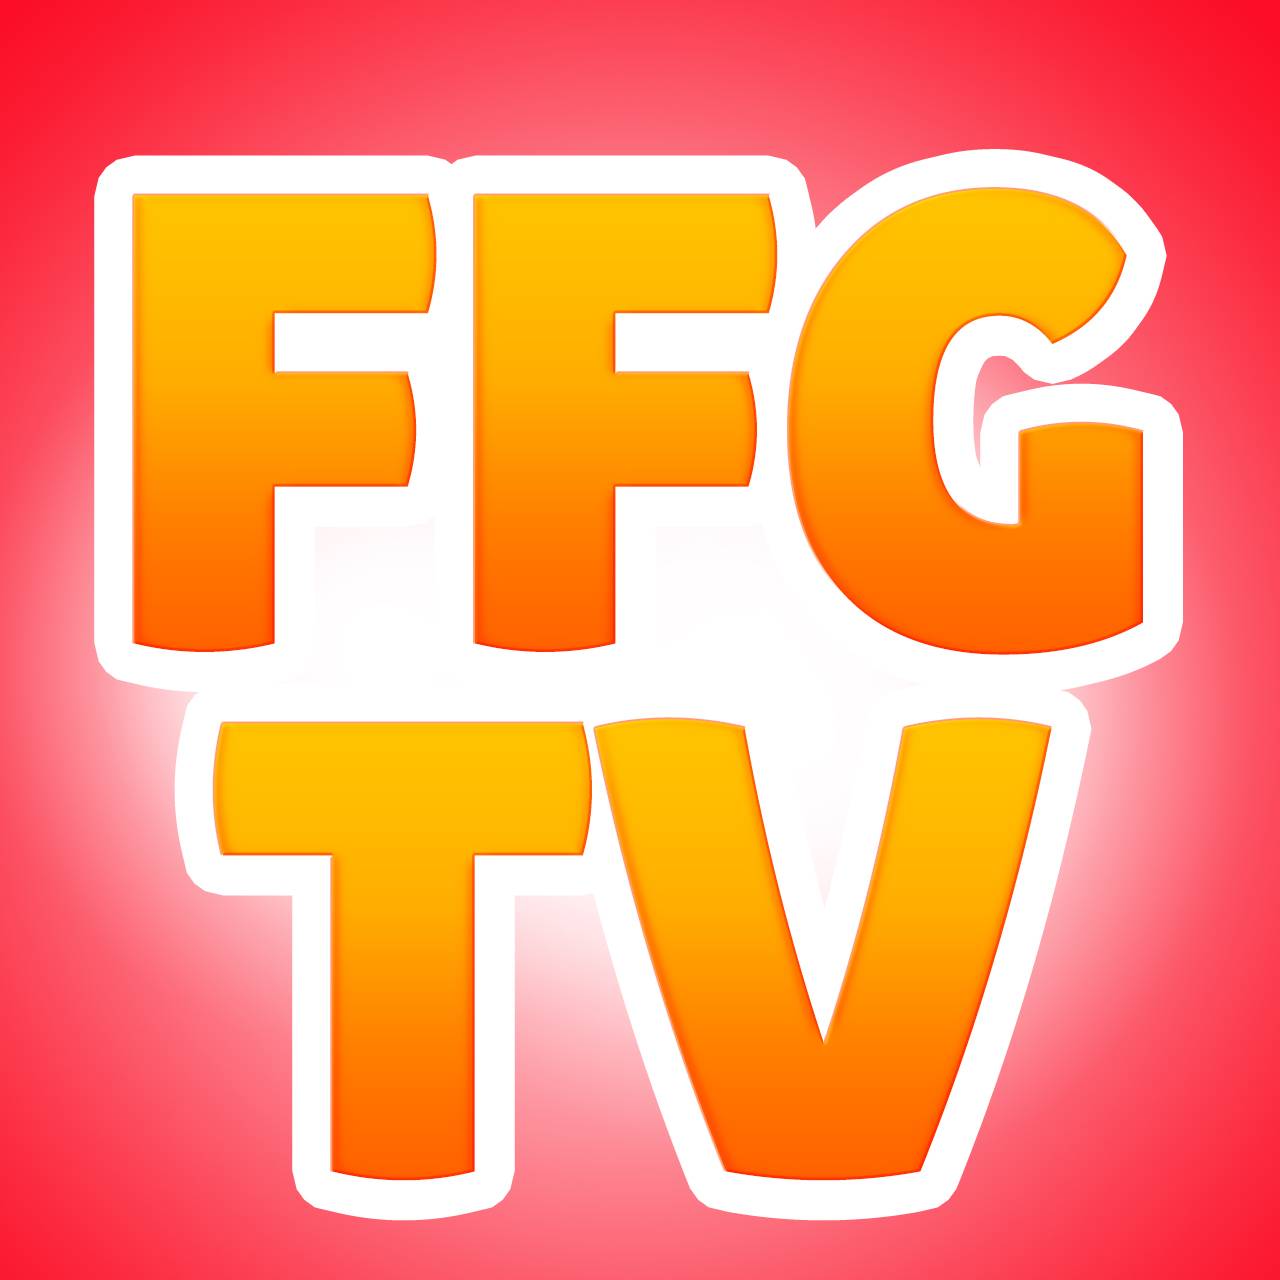 FFGTV